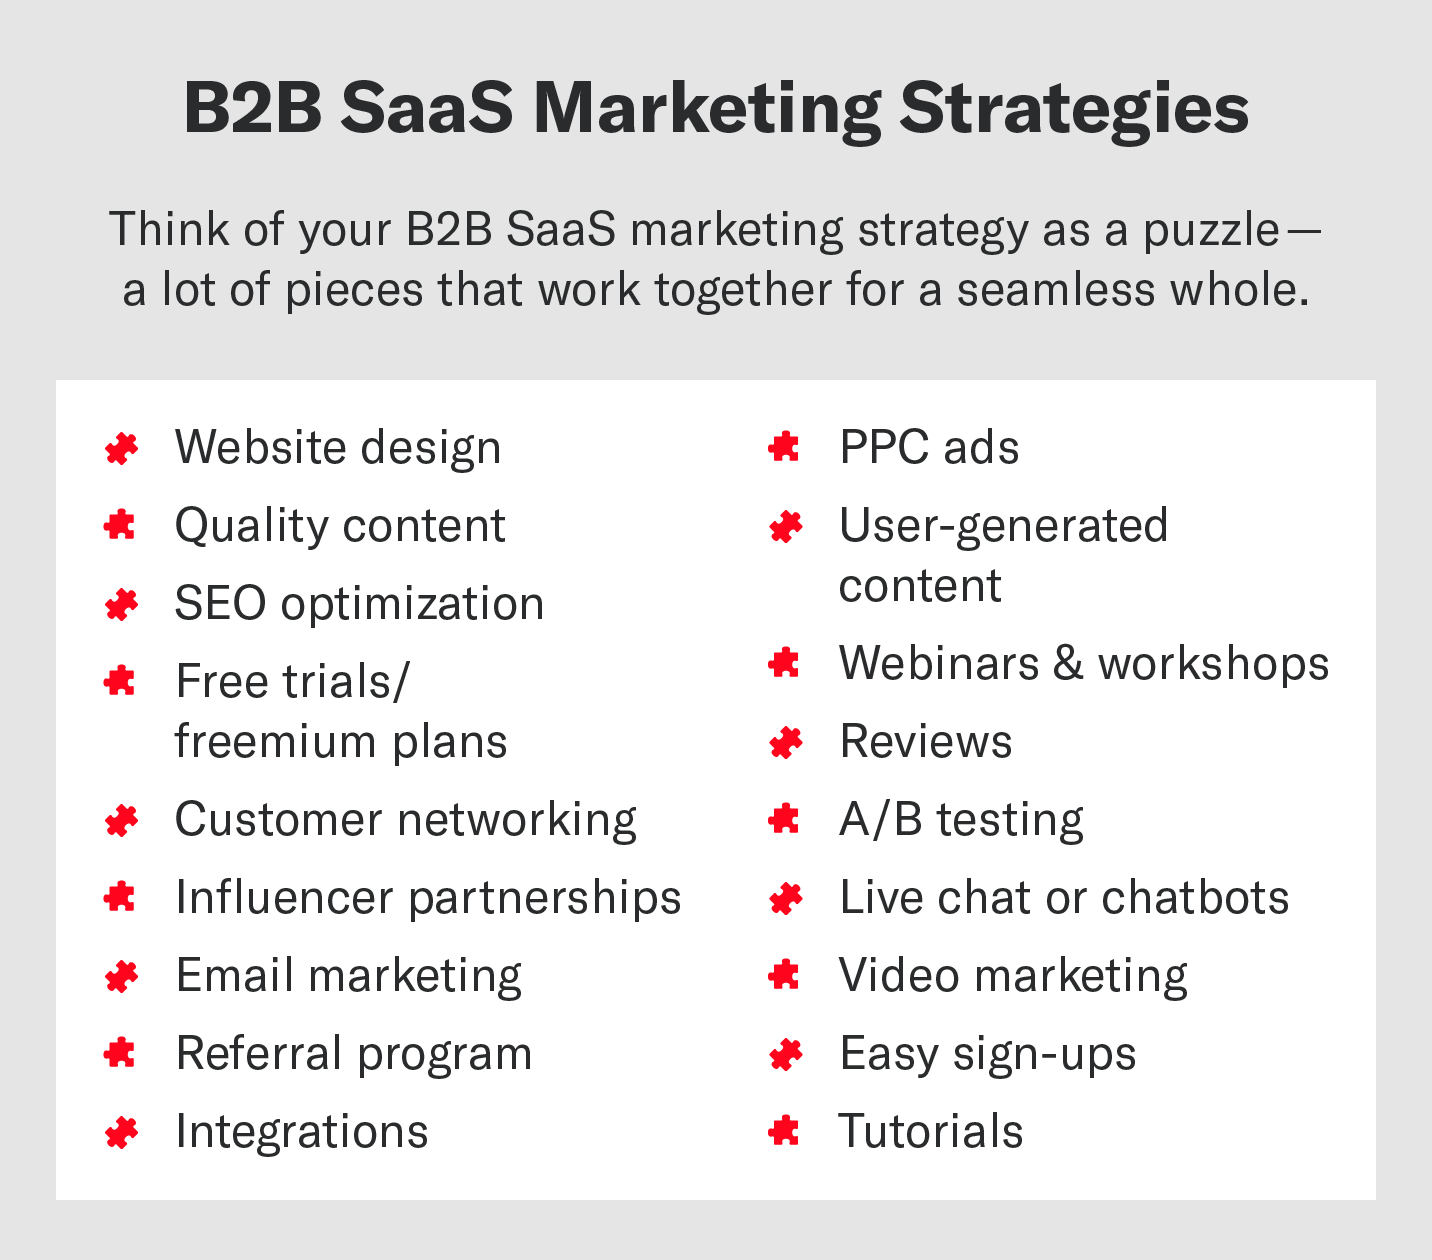 B2B SaaS marketing strategies to add to your marketing arsenal.